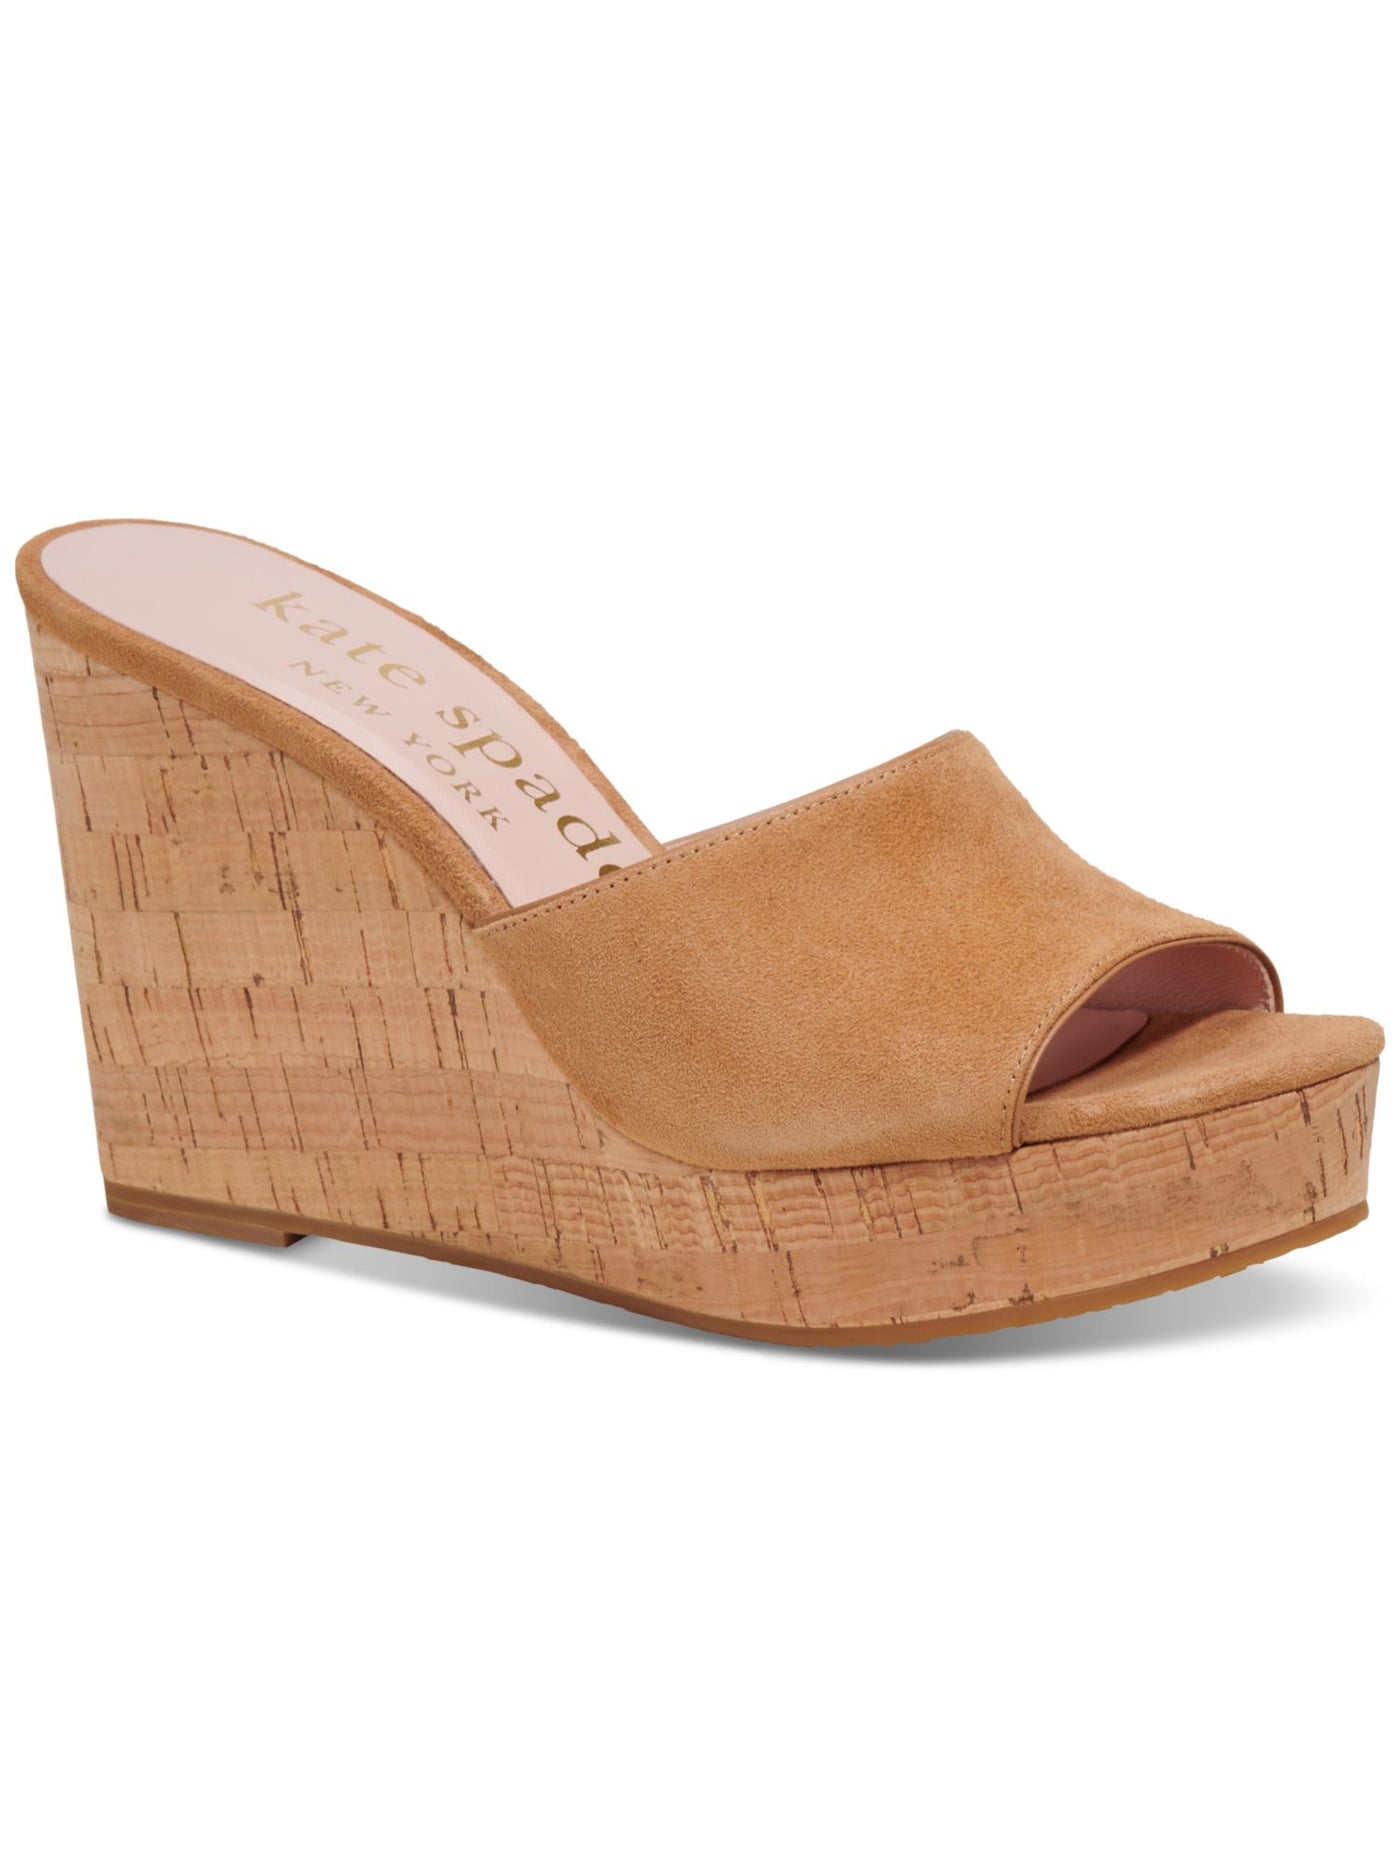 KATE SPADE NEW YORK Womens Beige 1" Cork-Like Platform Padded Penelope Round Toe Wedge Slip On Leather Heeled Sandal 11 B